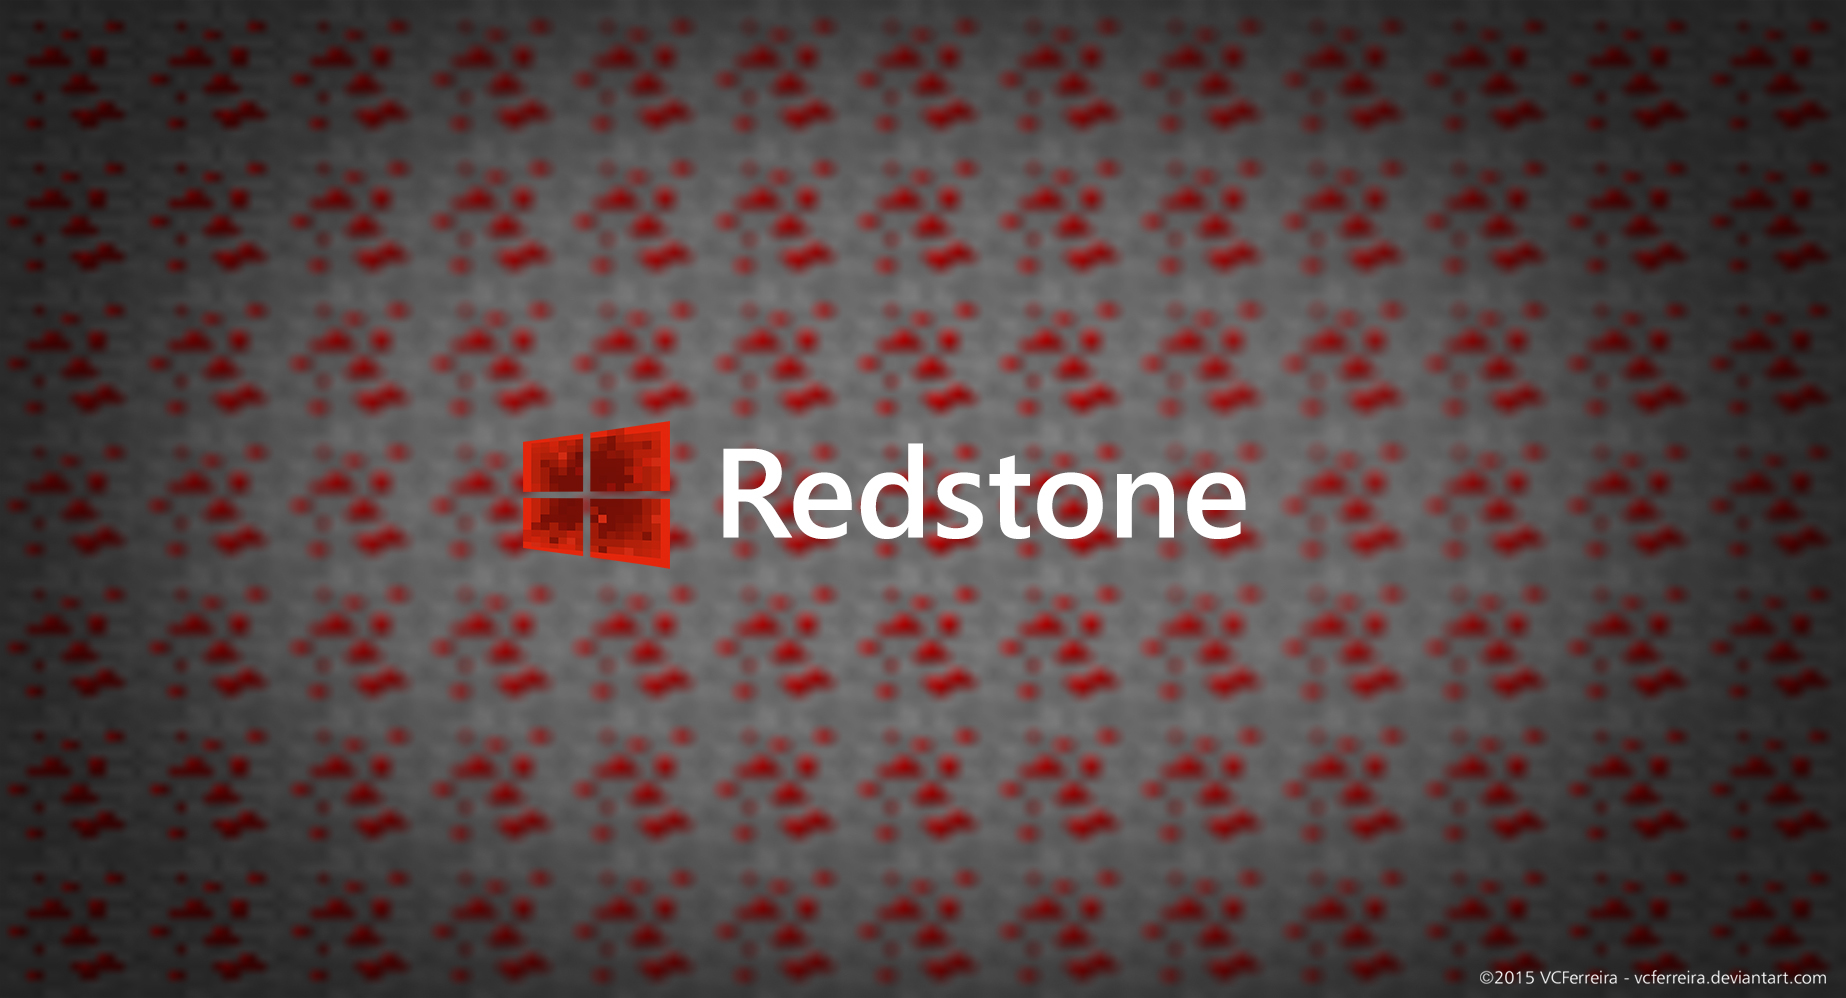 Redstone The Next Windows By Vcferreira